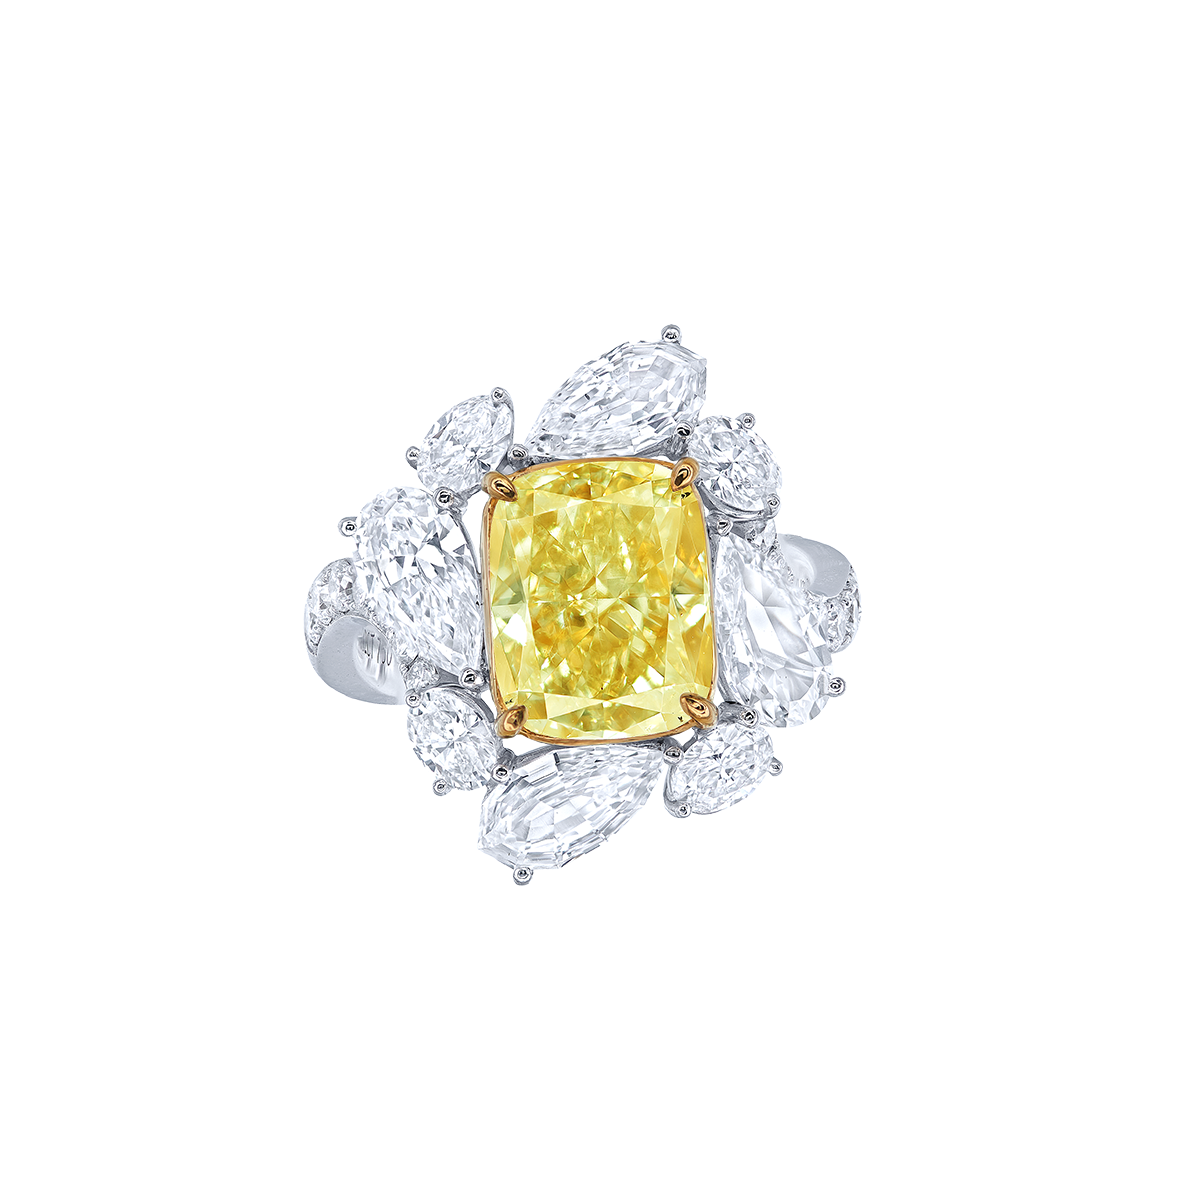 GIA 4.02 克拉 綠黃鑽鑽戒
Fancy Light Greenish Yellow 
Colored Diamond and 
Diamond Ring